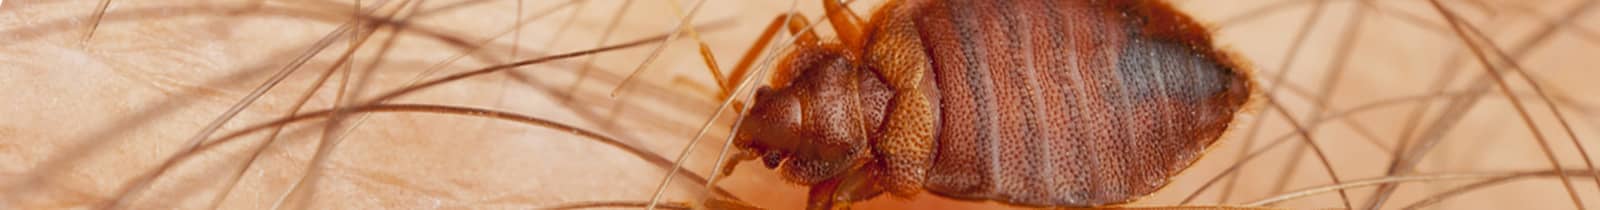 Bed Bugs exterminator pest control Nashville, TN